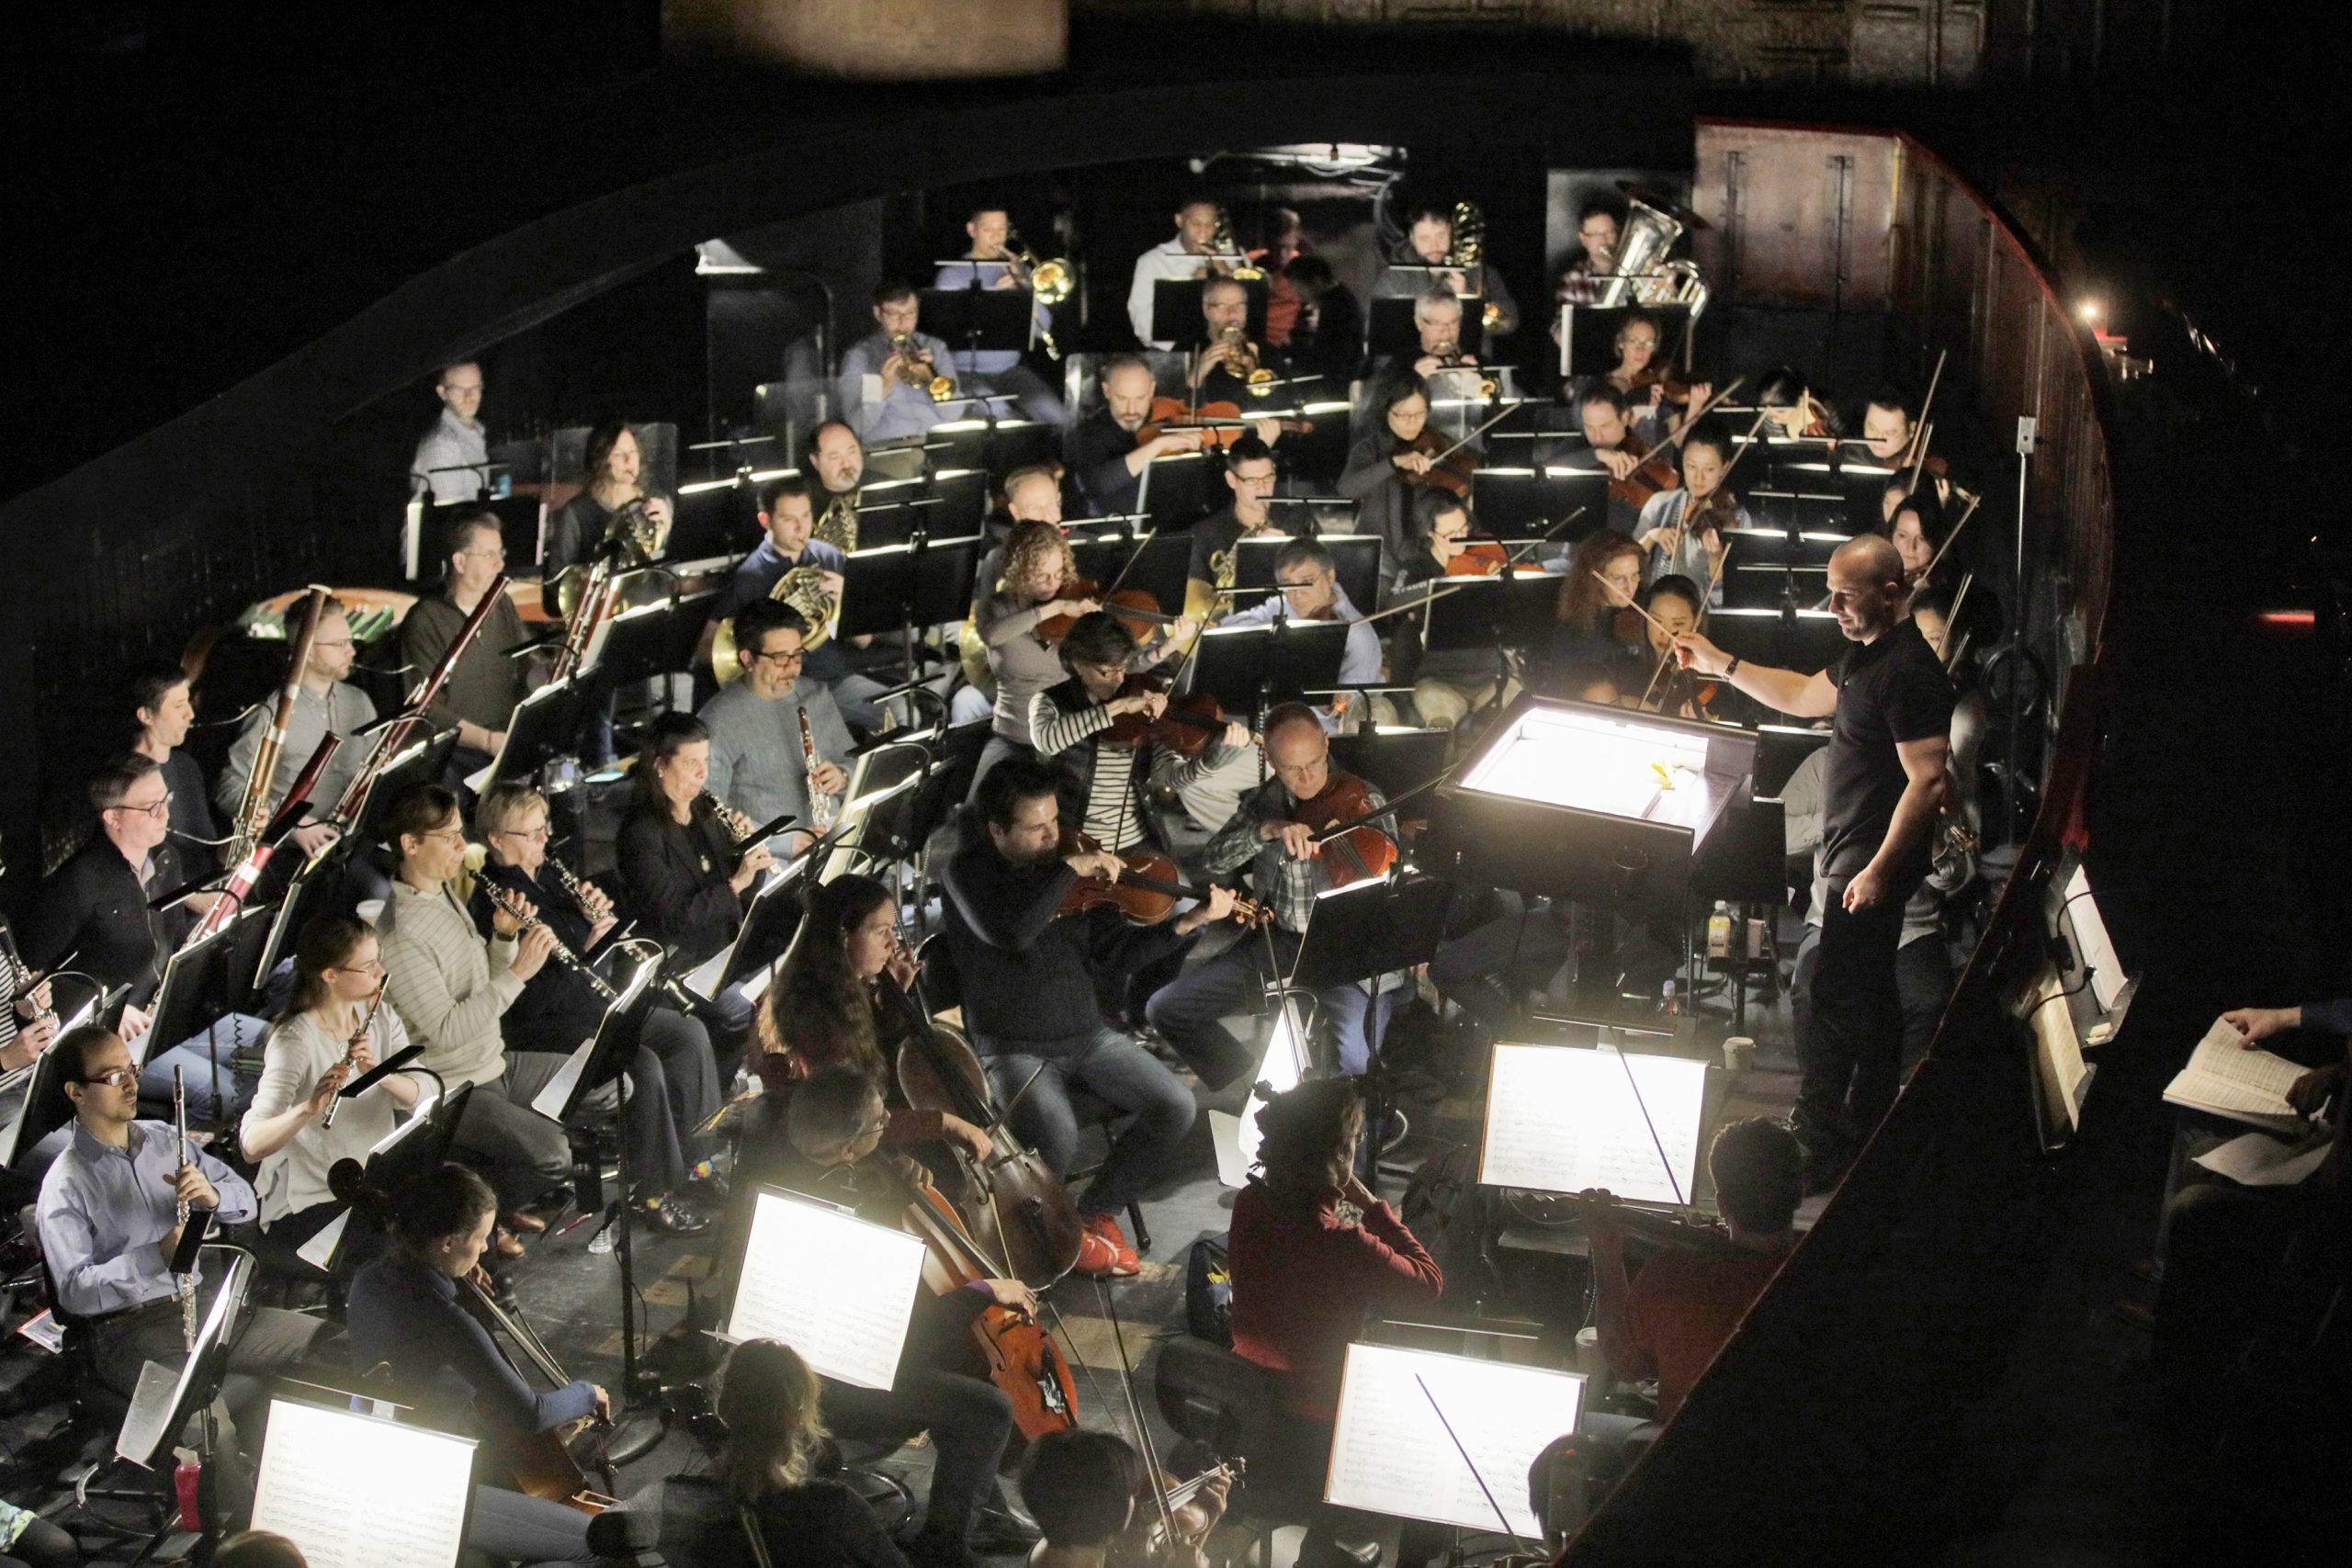 Met Opera Orchestra finds work in Dallas